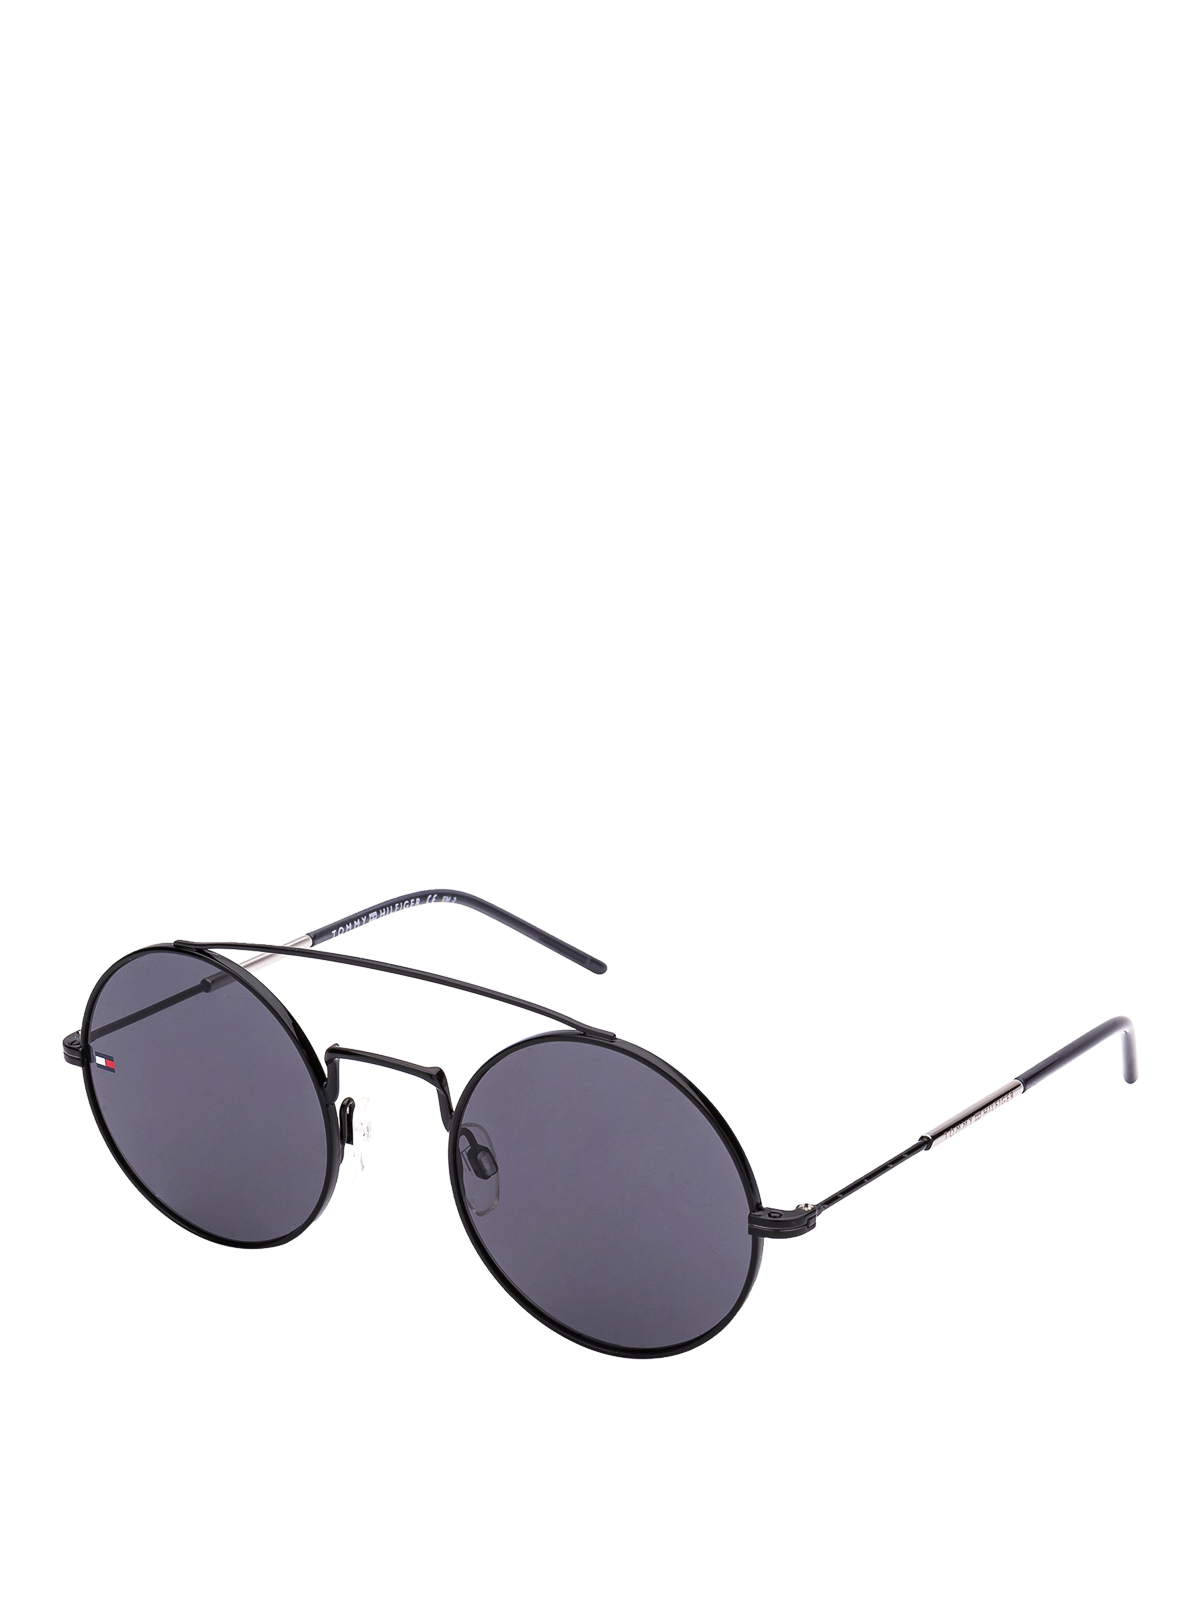 tommy hilfiger sunglasses black